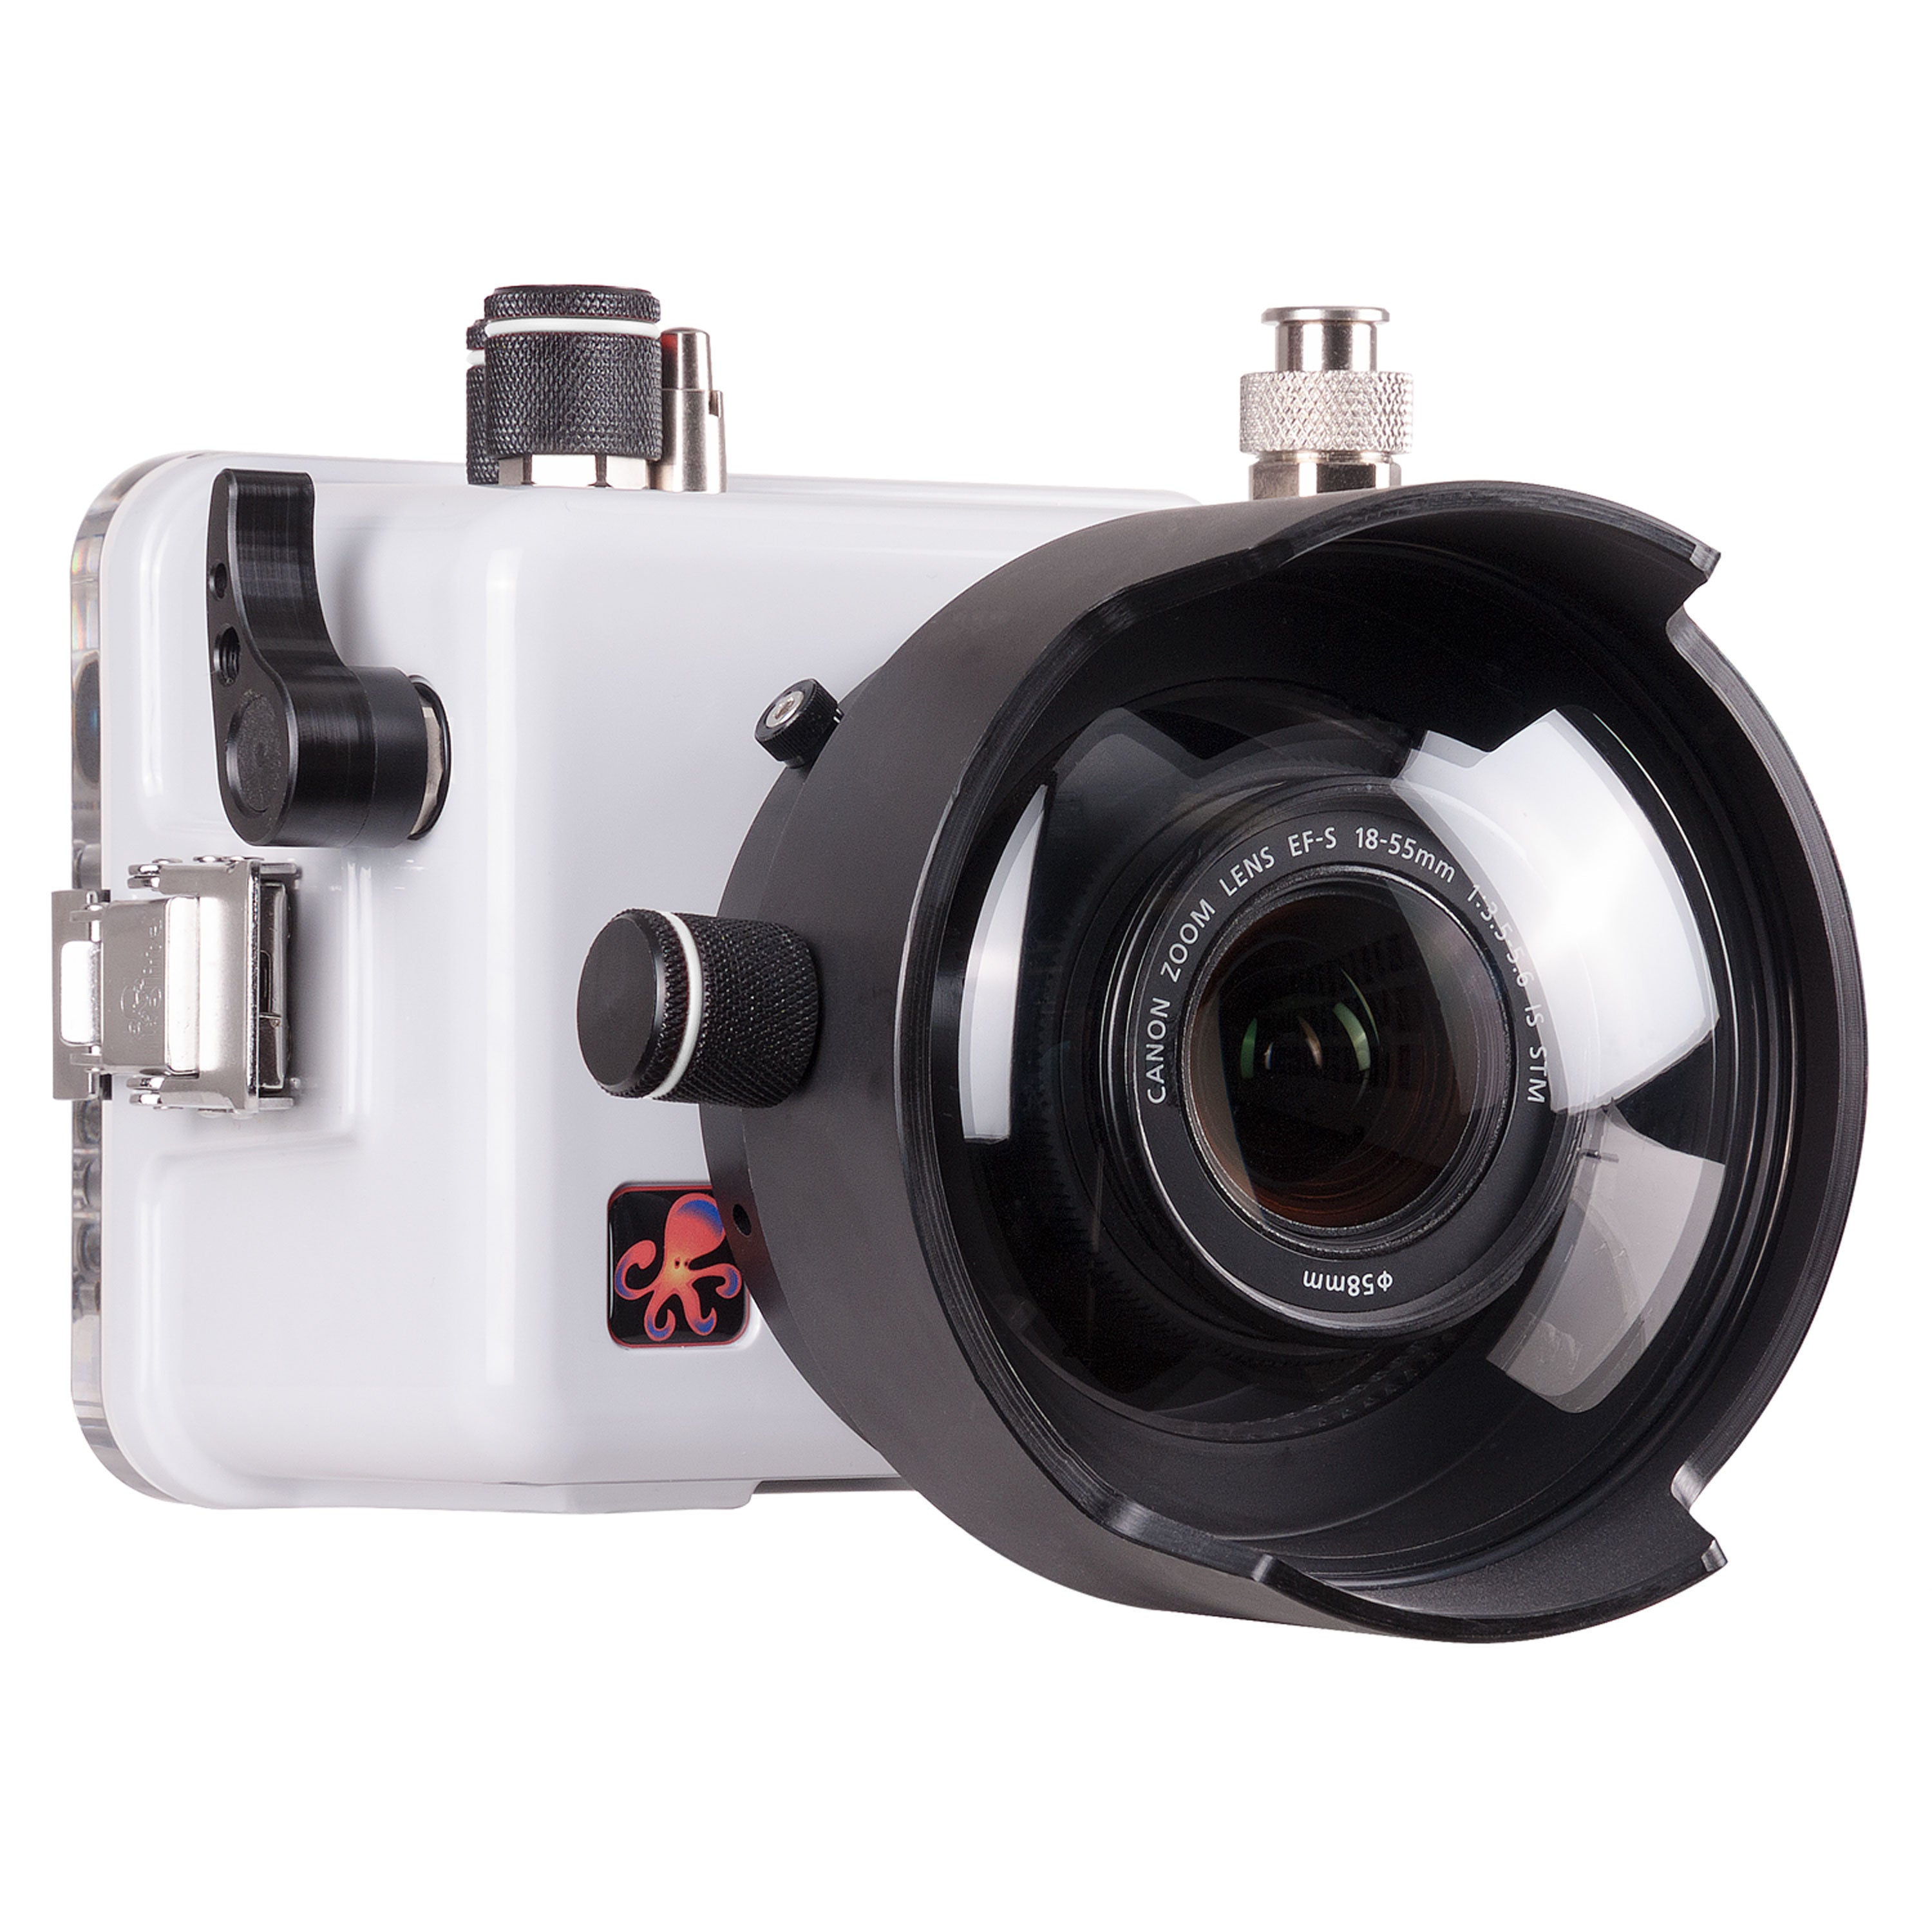 200DLM/C Underwater Housing and Canon Rebel SL1 Camera Kit